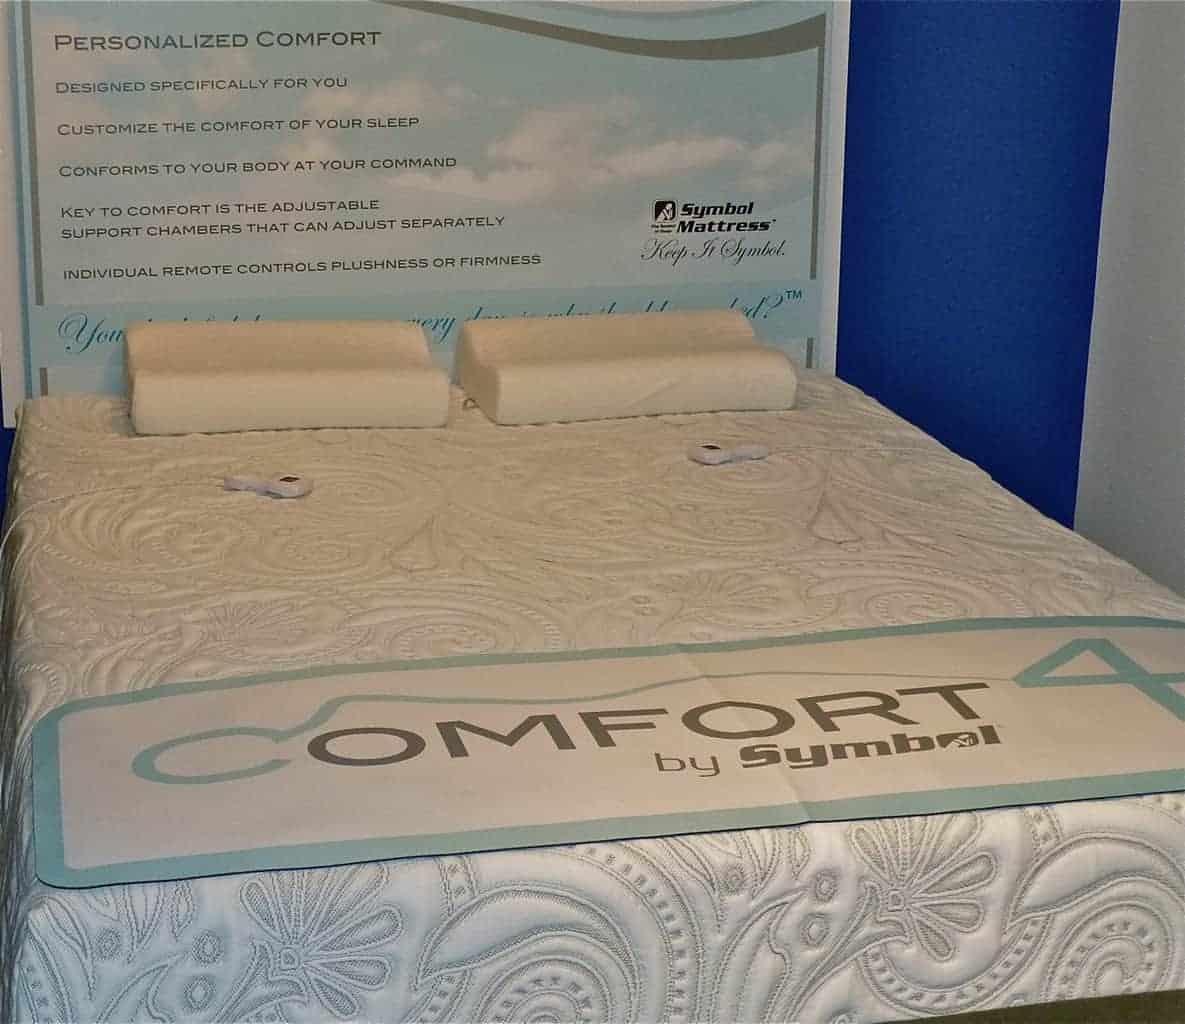 Comfort 4U by Symbol airbed mattress